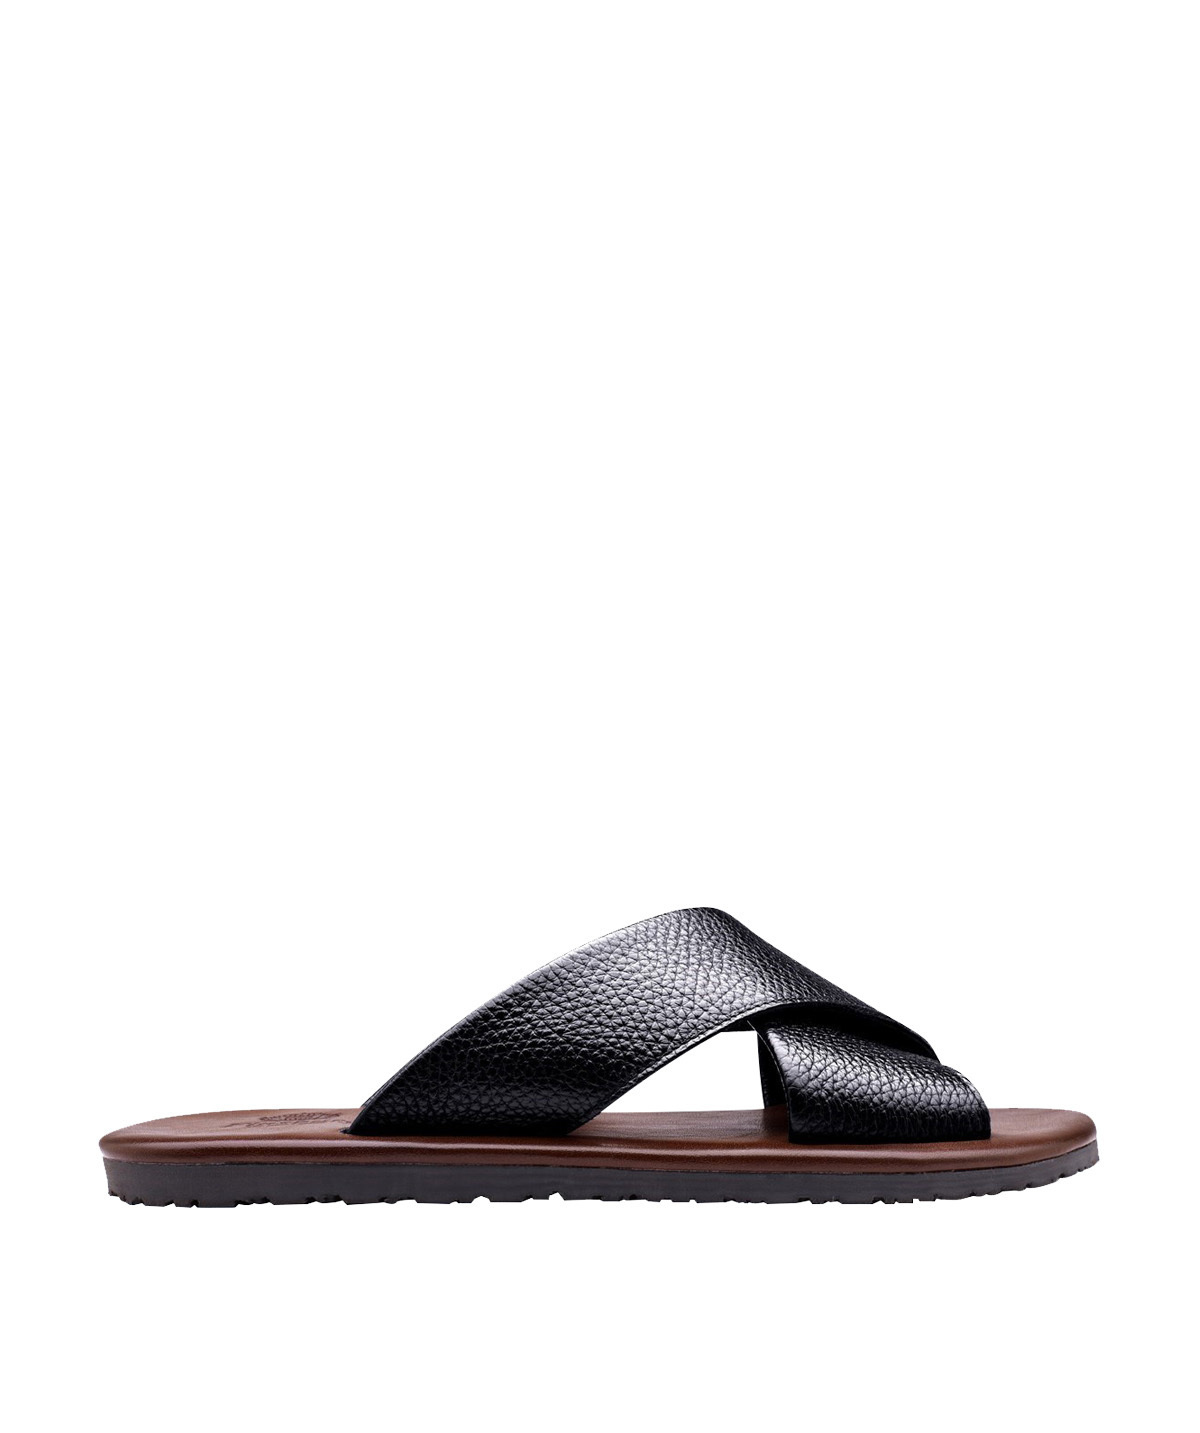 Sandal PAROS Black Pebble Grain - Finsbury Shoes